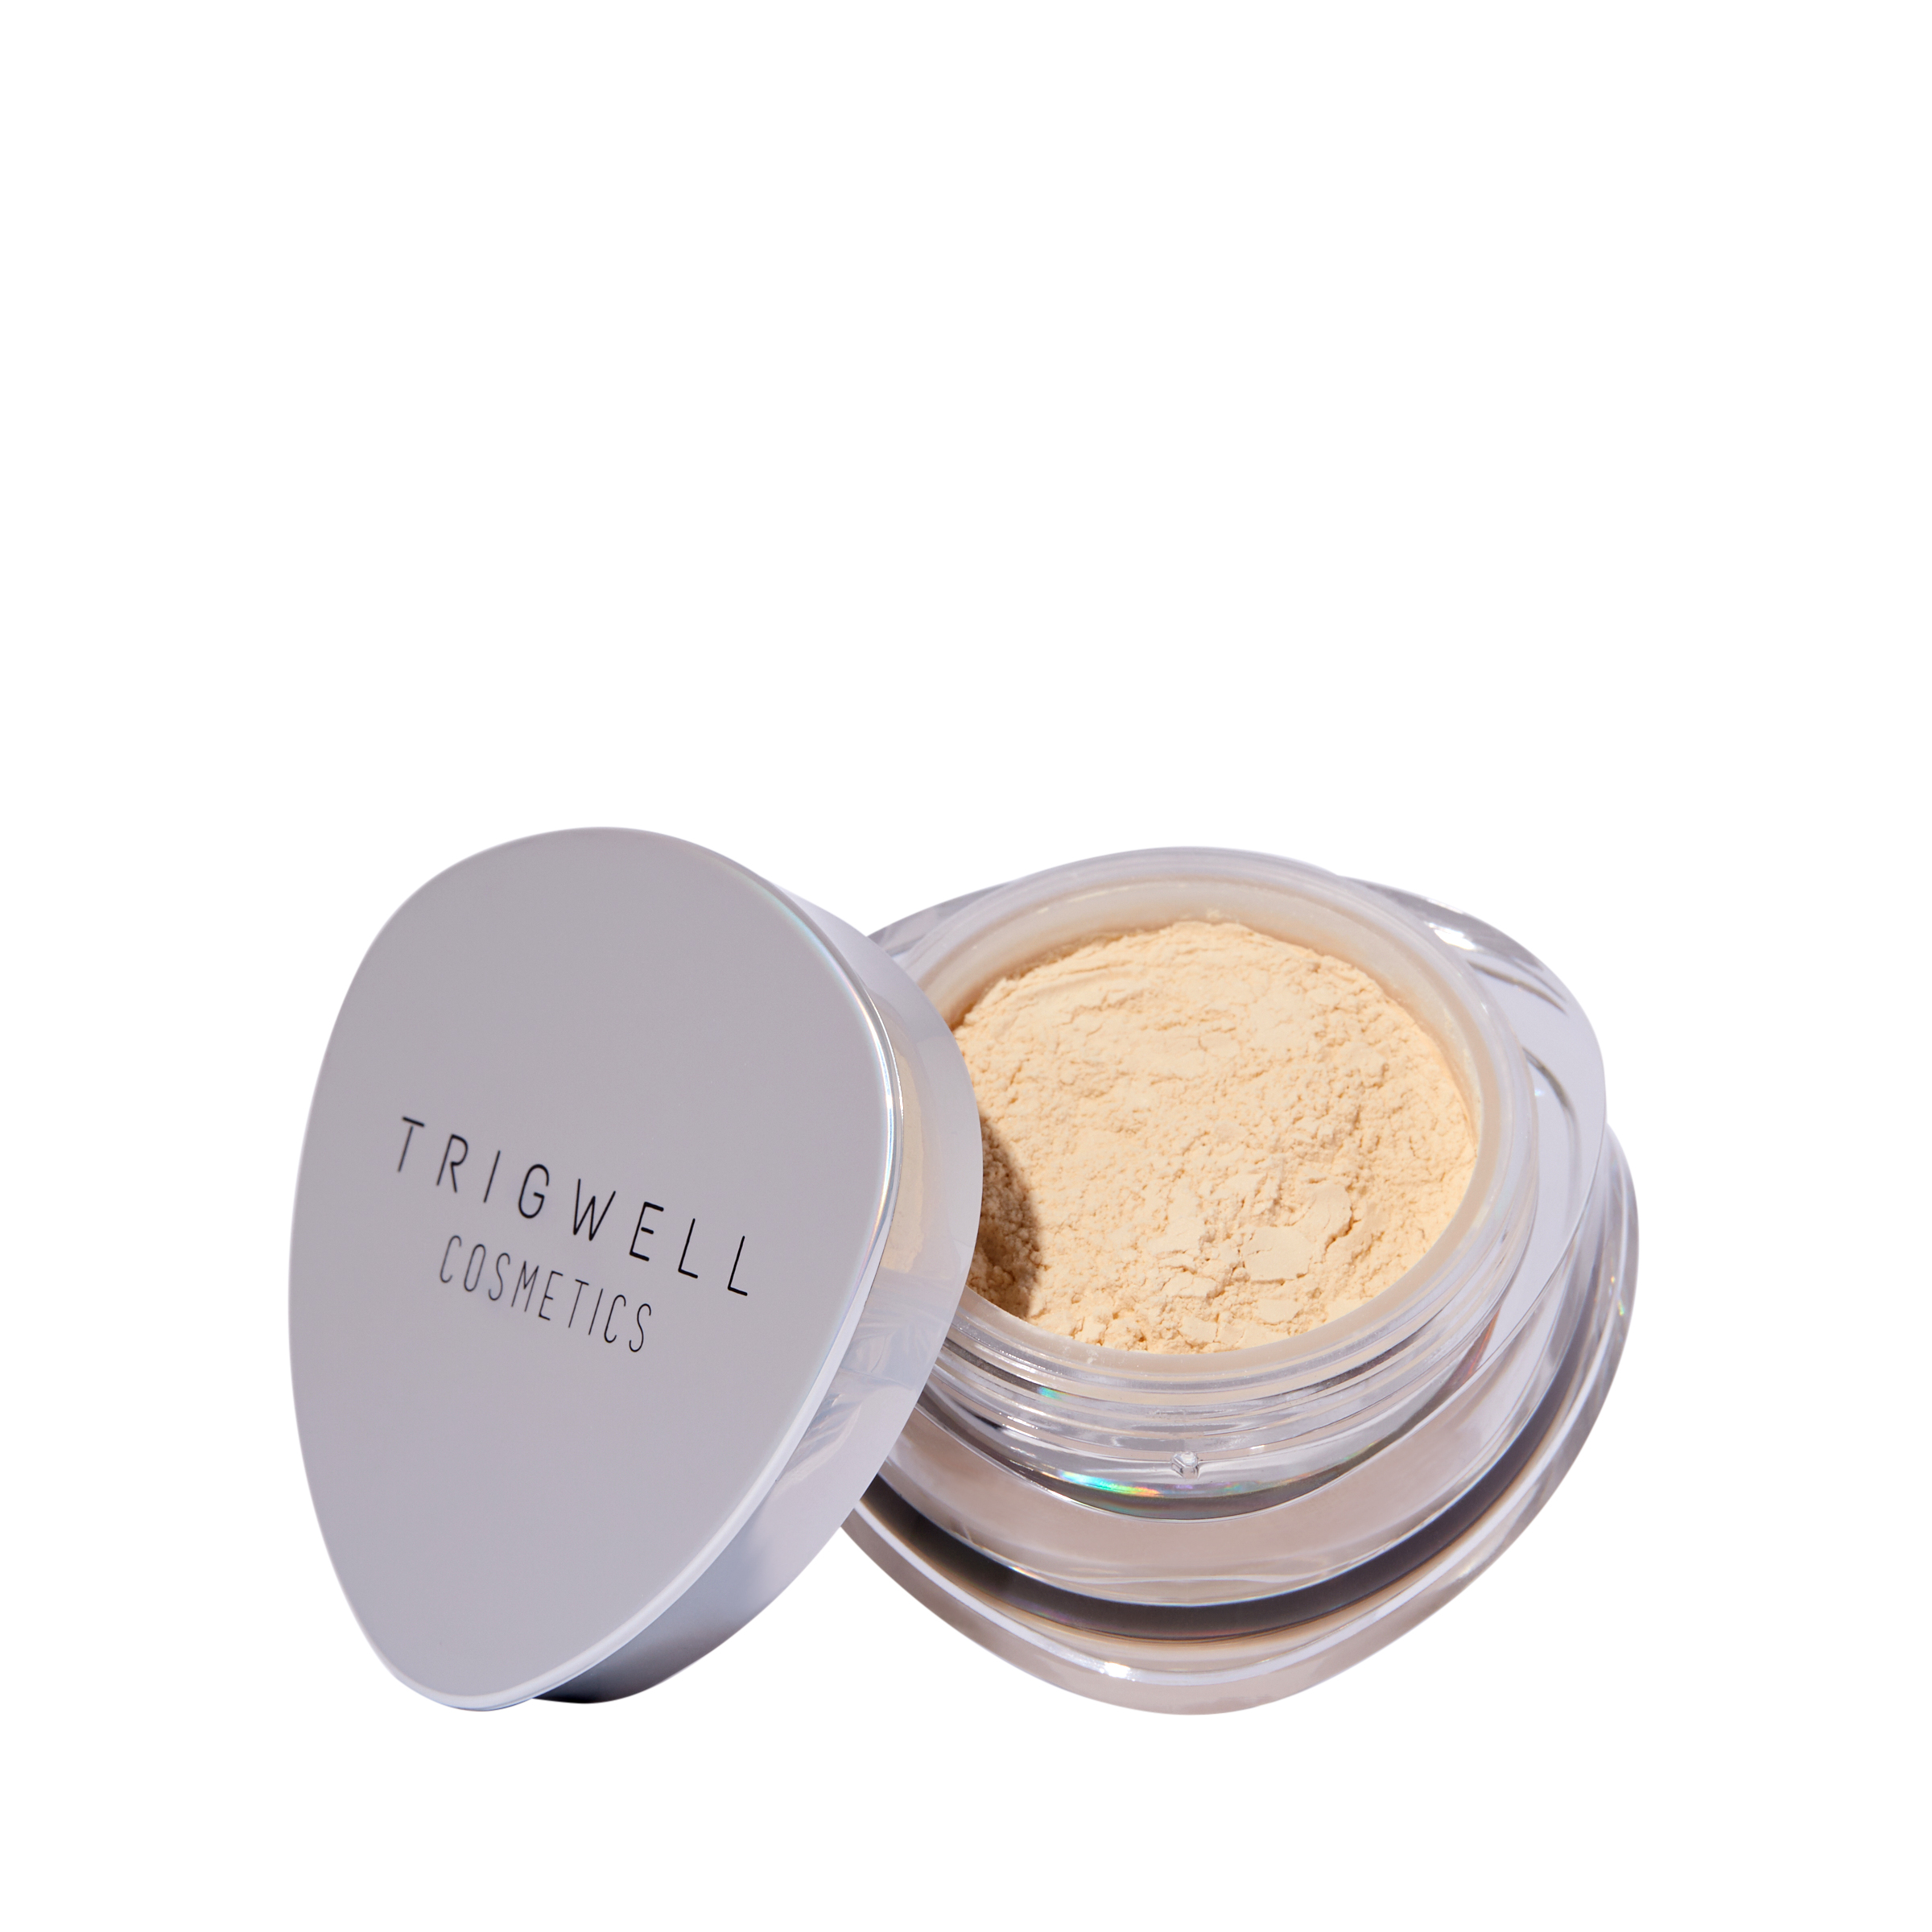 trigwell cosmetics velvet setting powder 8g (various shades) - shade 1